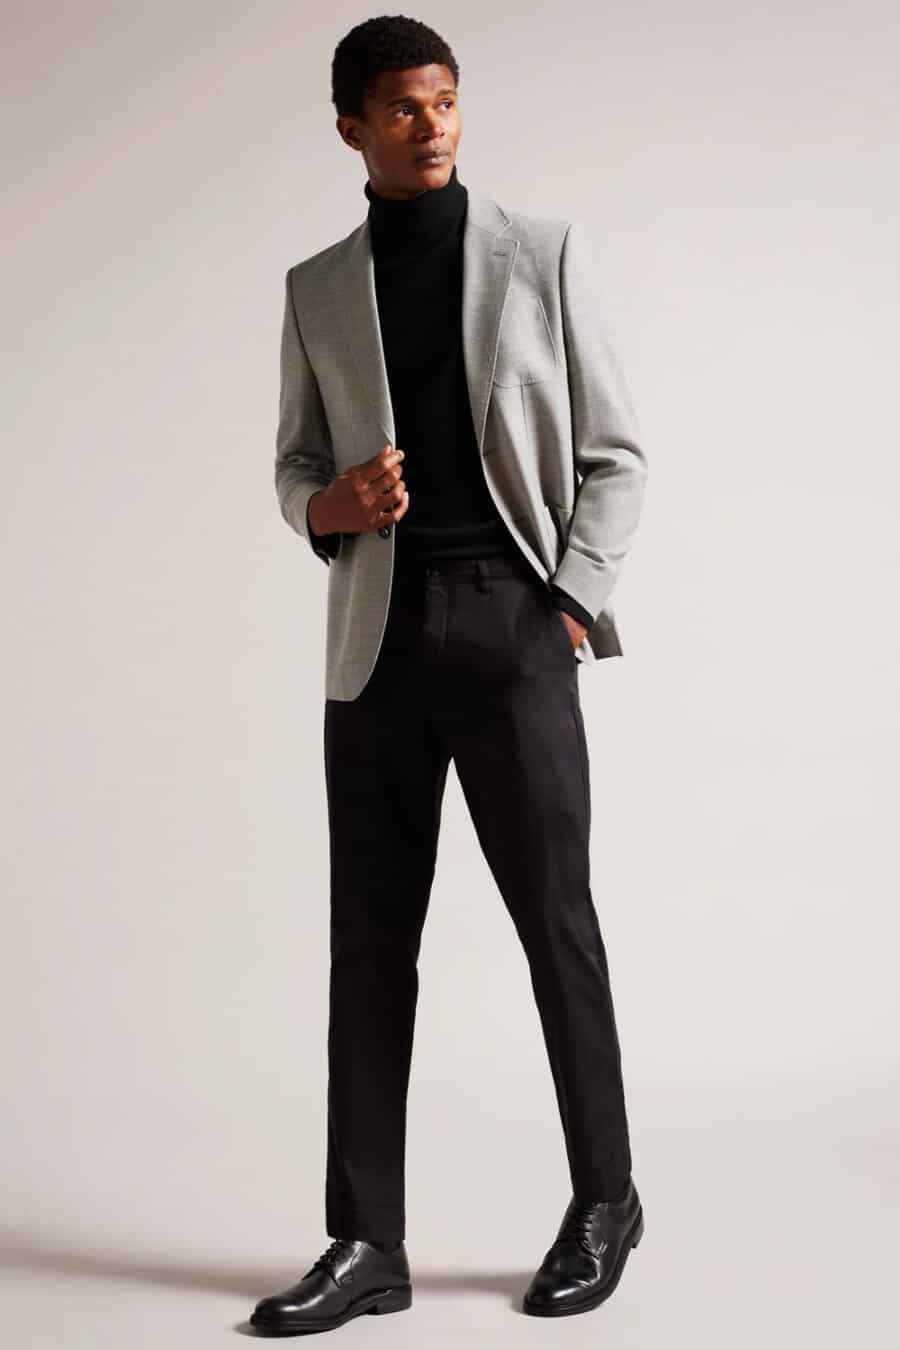 Men's black pants, black turtleneck, light grey blazer and black leather Derby shoes outfit